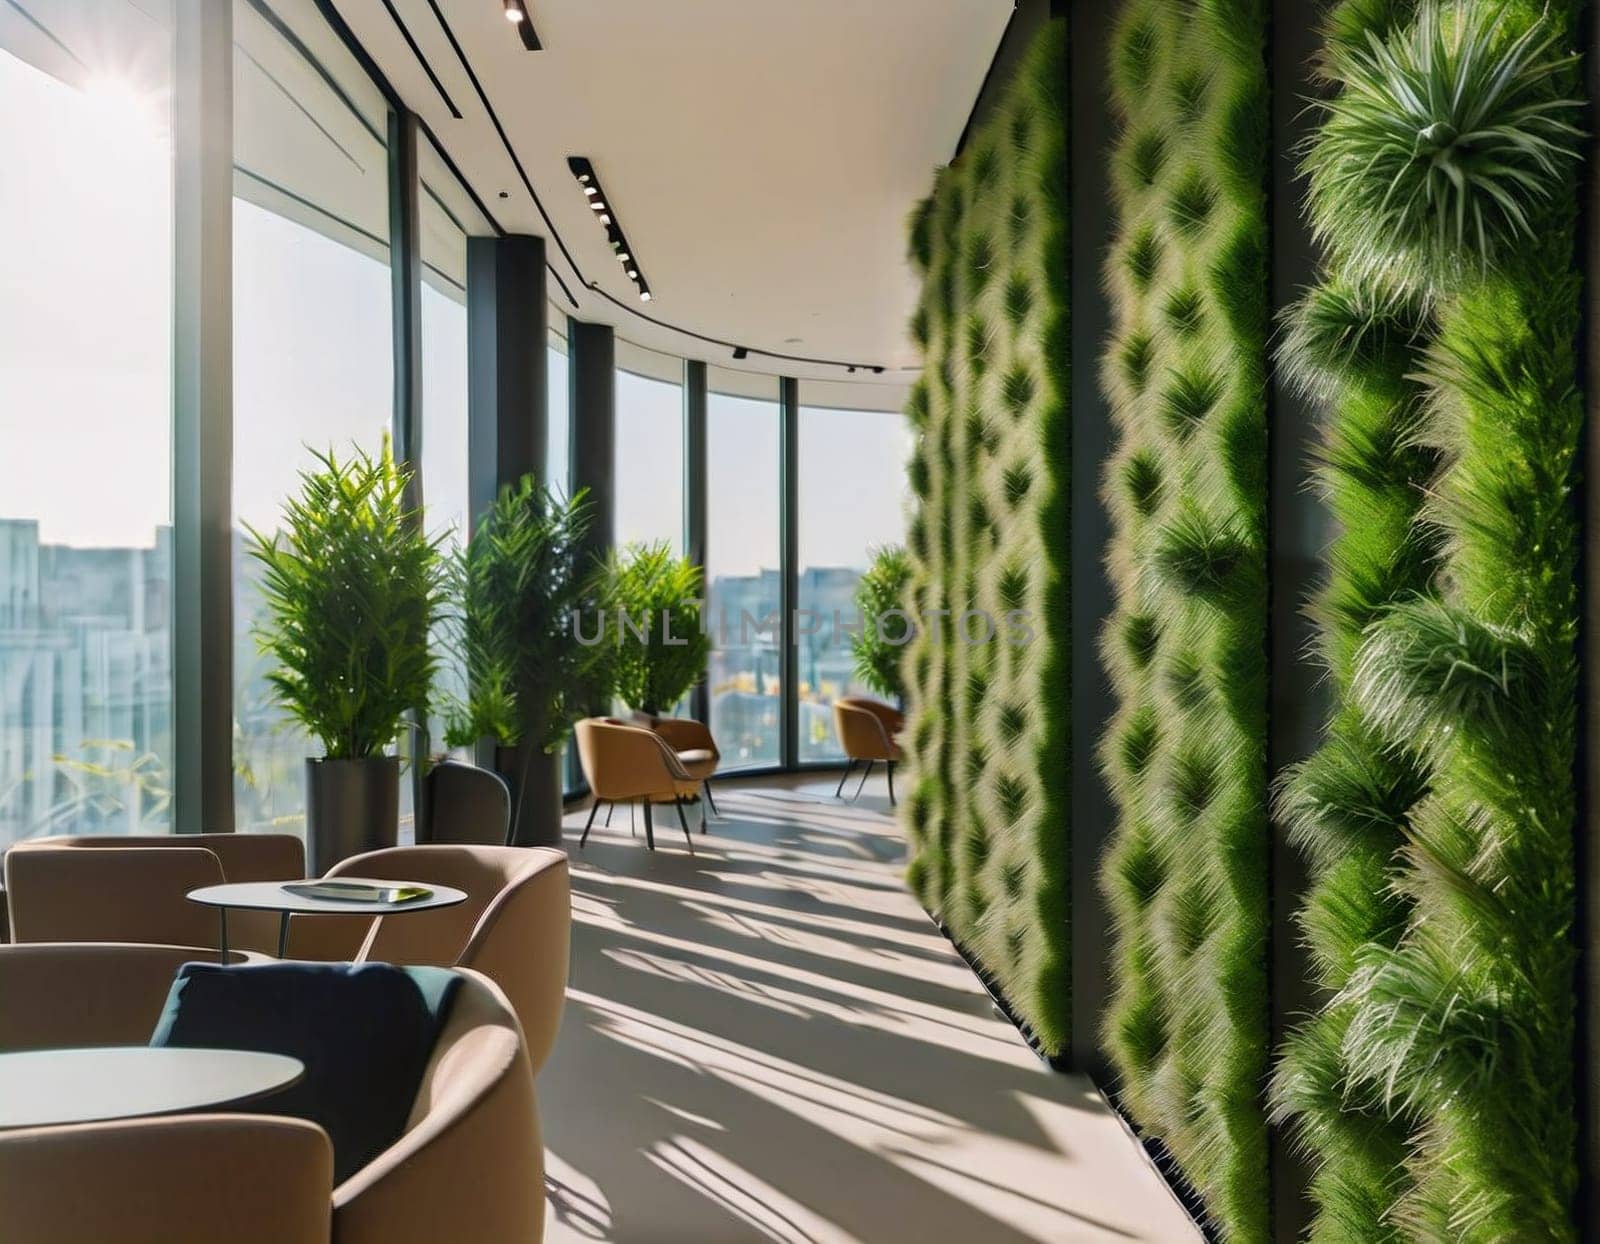 Vertical garden indoors. Living green wall in modern office interior by fascinadora